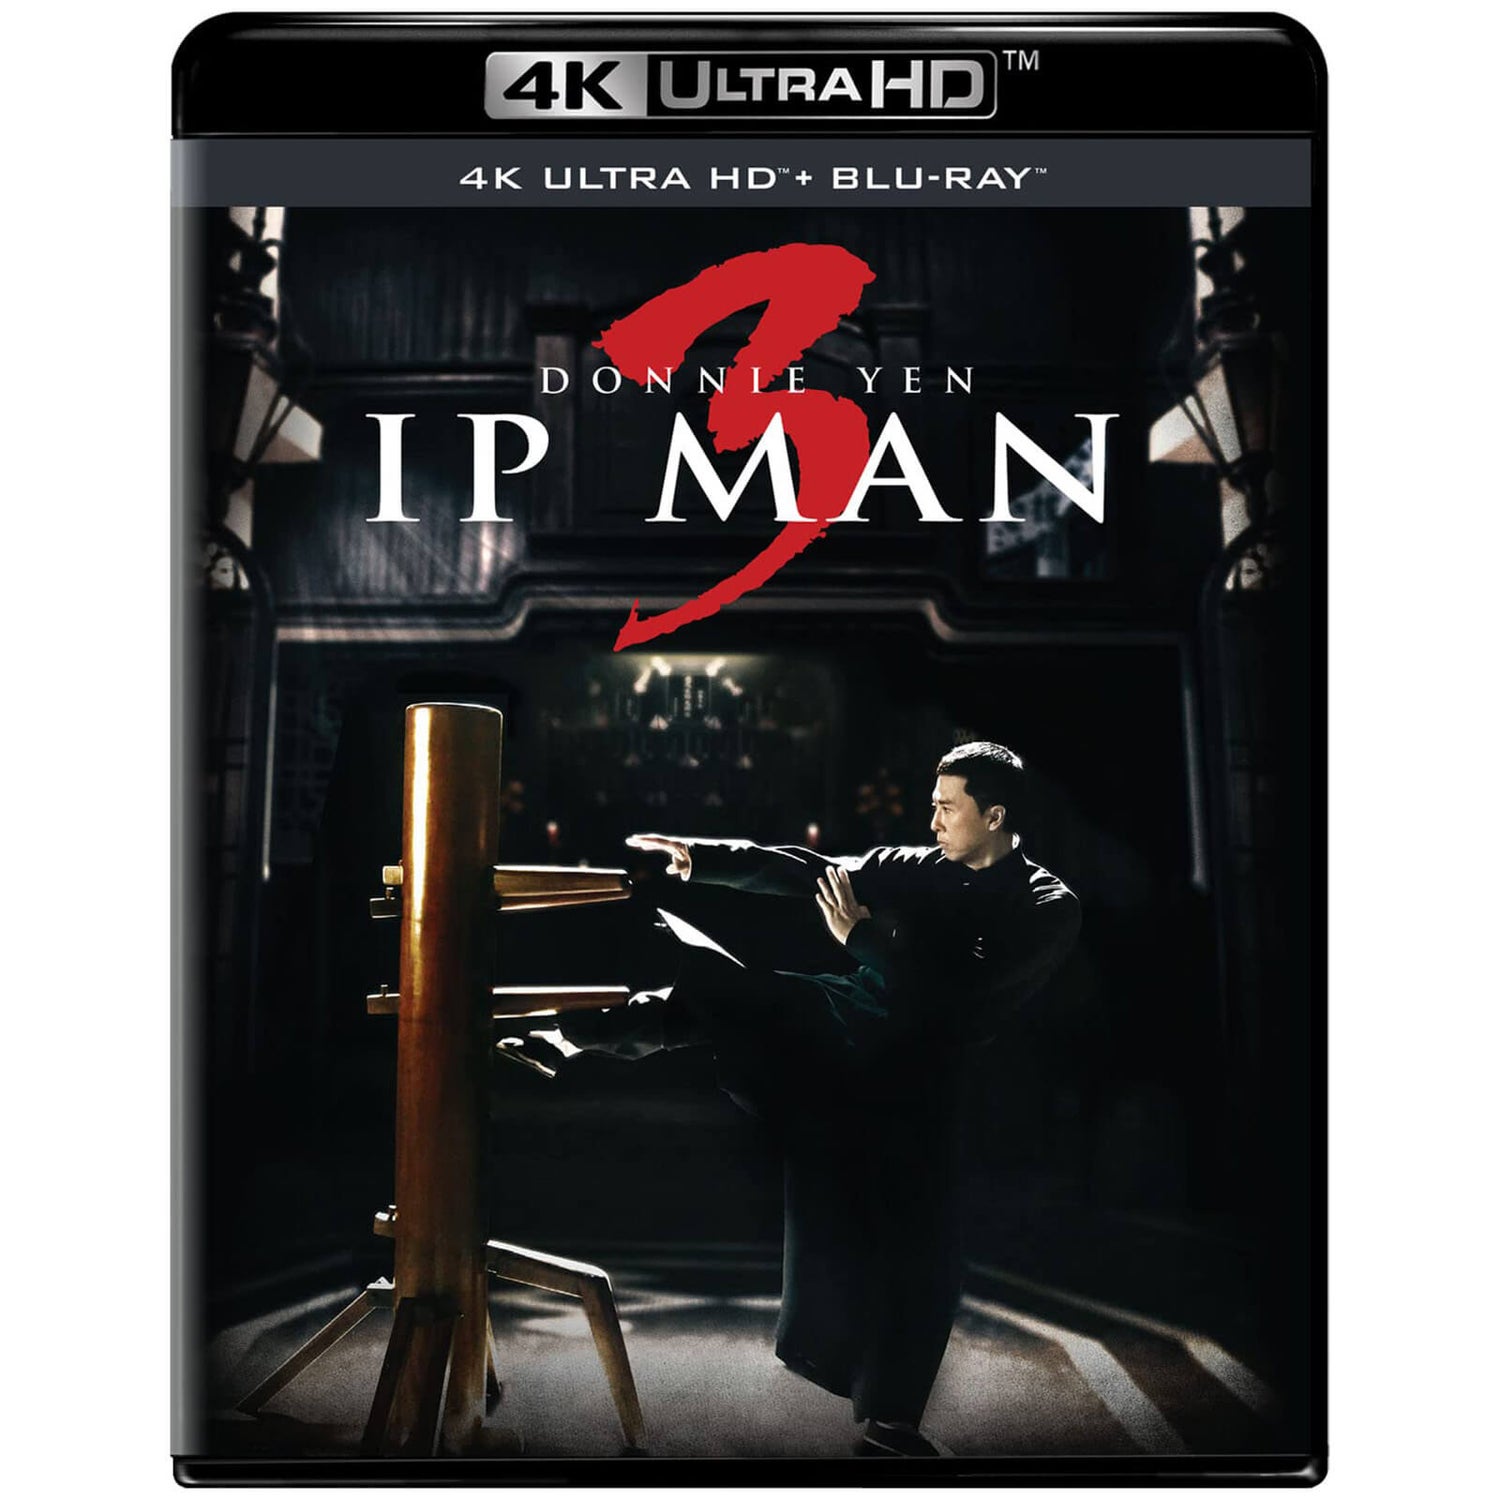 Ip Man 3 4K Ultra HD (Includes Blu-ray)